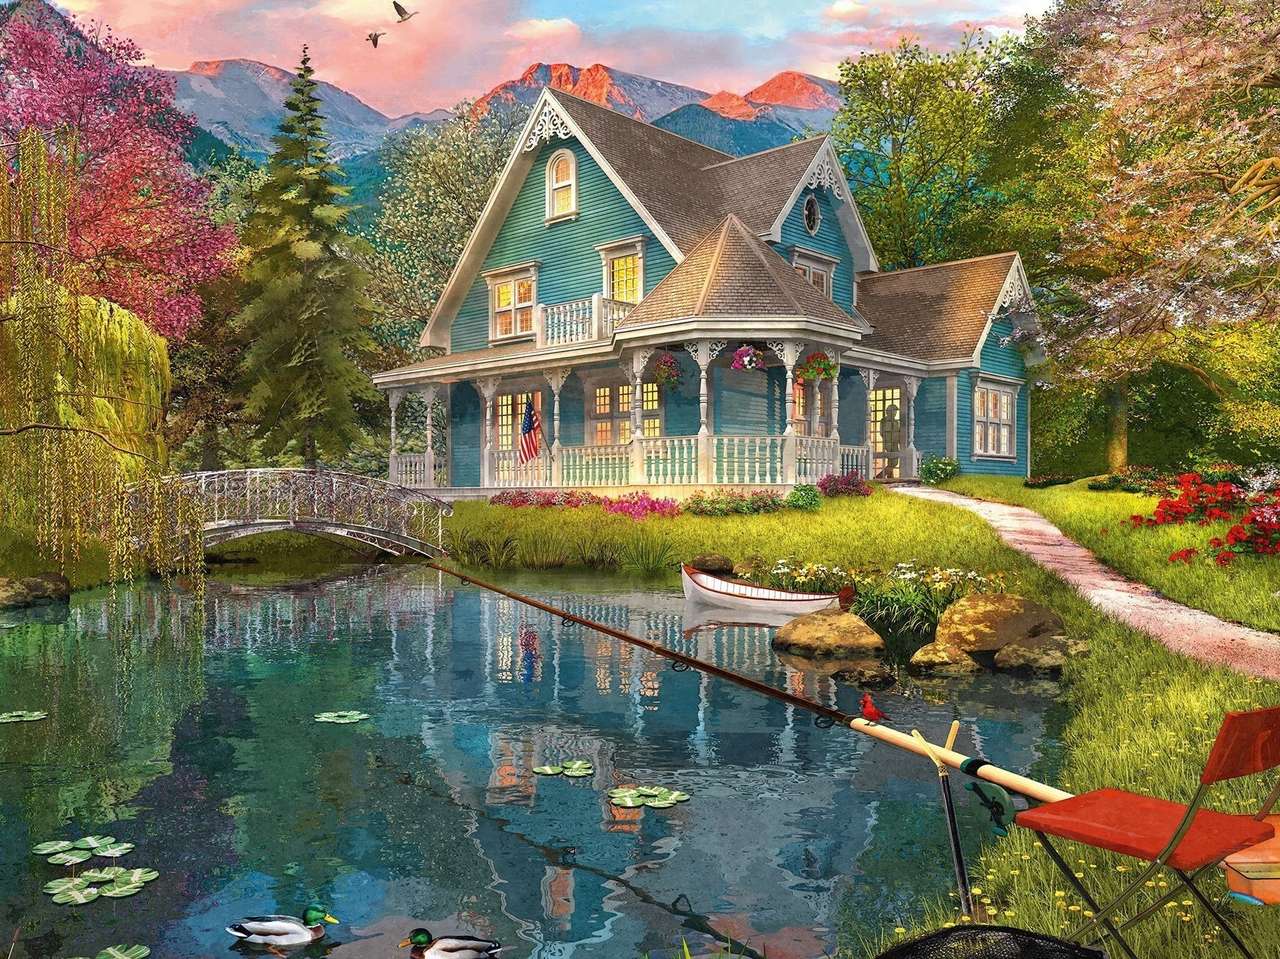 Casa al lago in montagna puzzle online